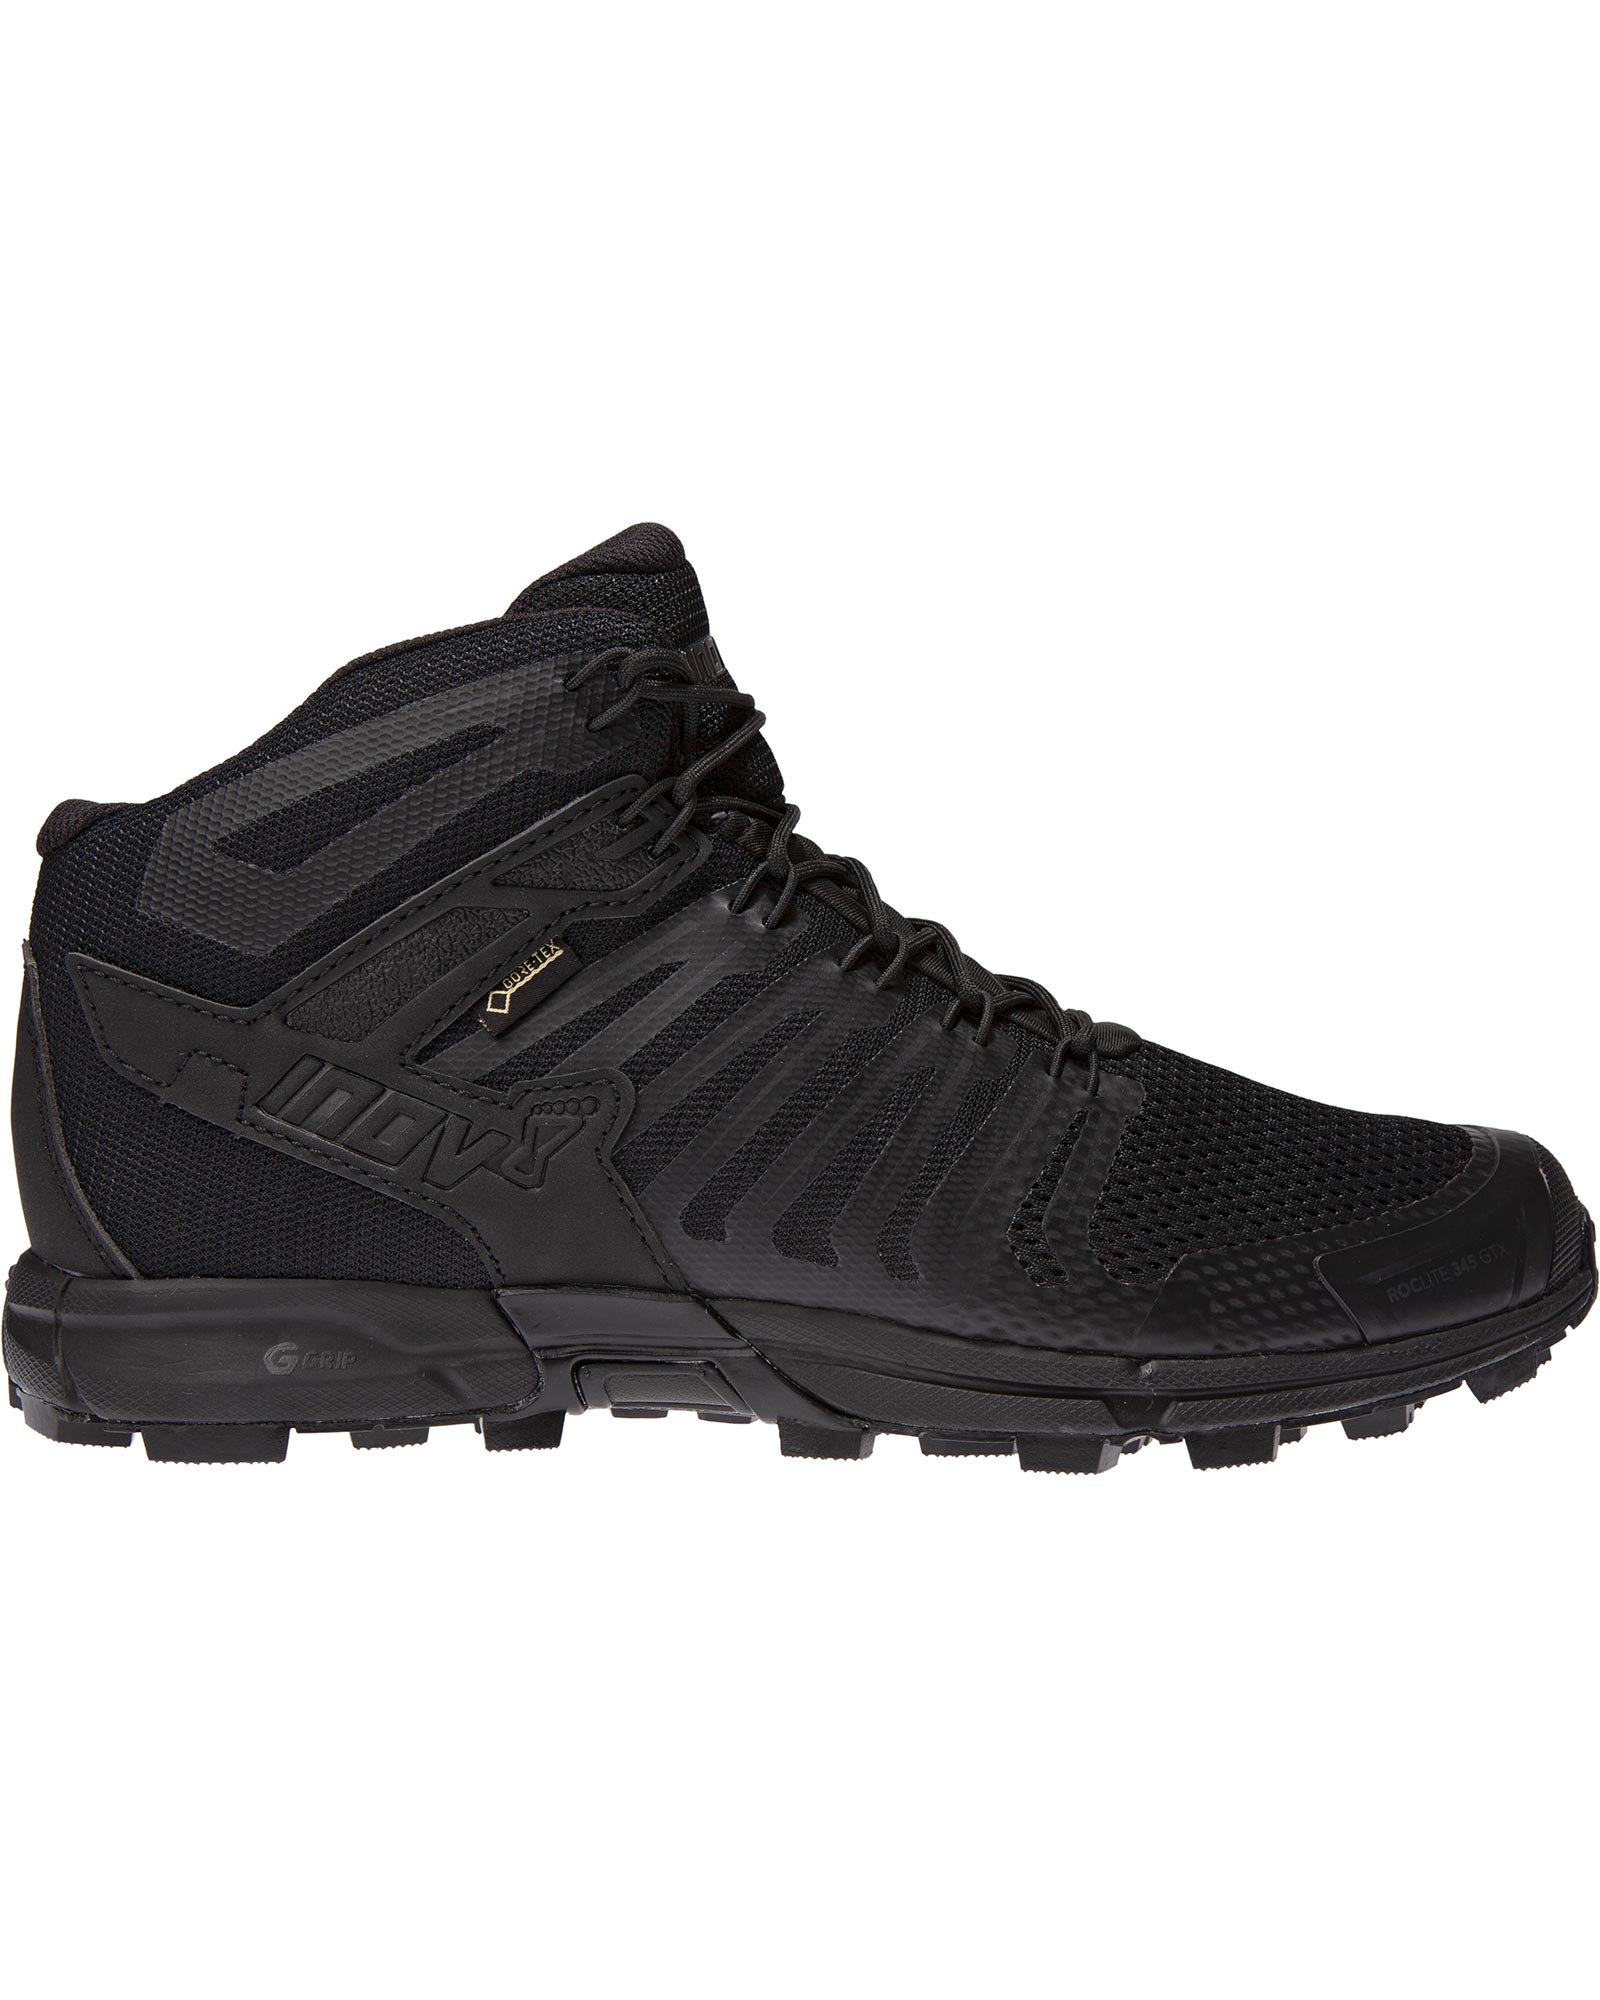 Inov 8 Roclite G 345 Mid GORE TEX Men’s Boots - black UK 8